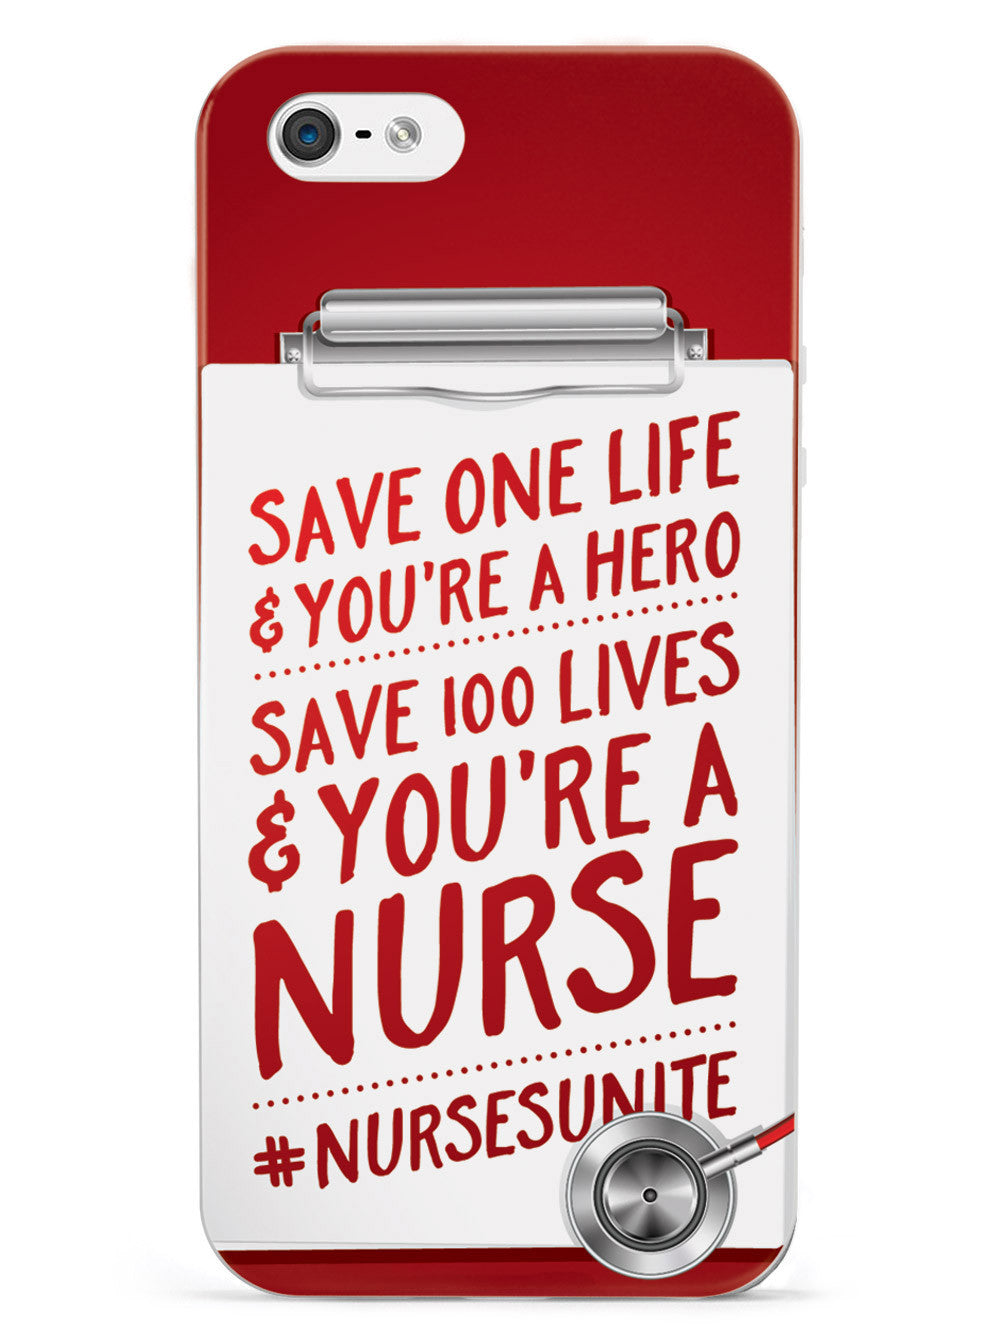 Save 100 Lives and You're A Nurse - #NursesUnite Case